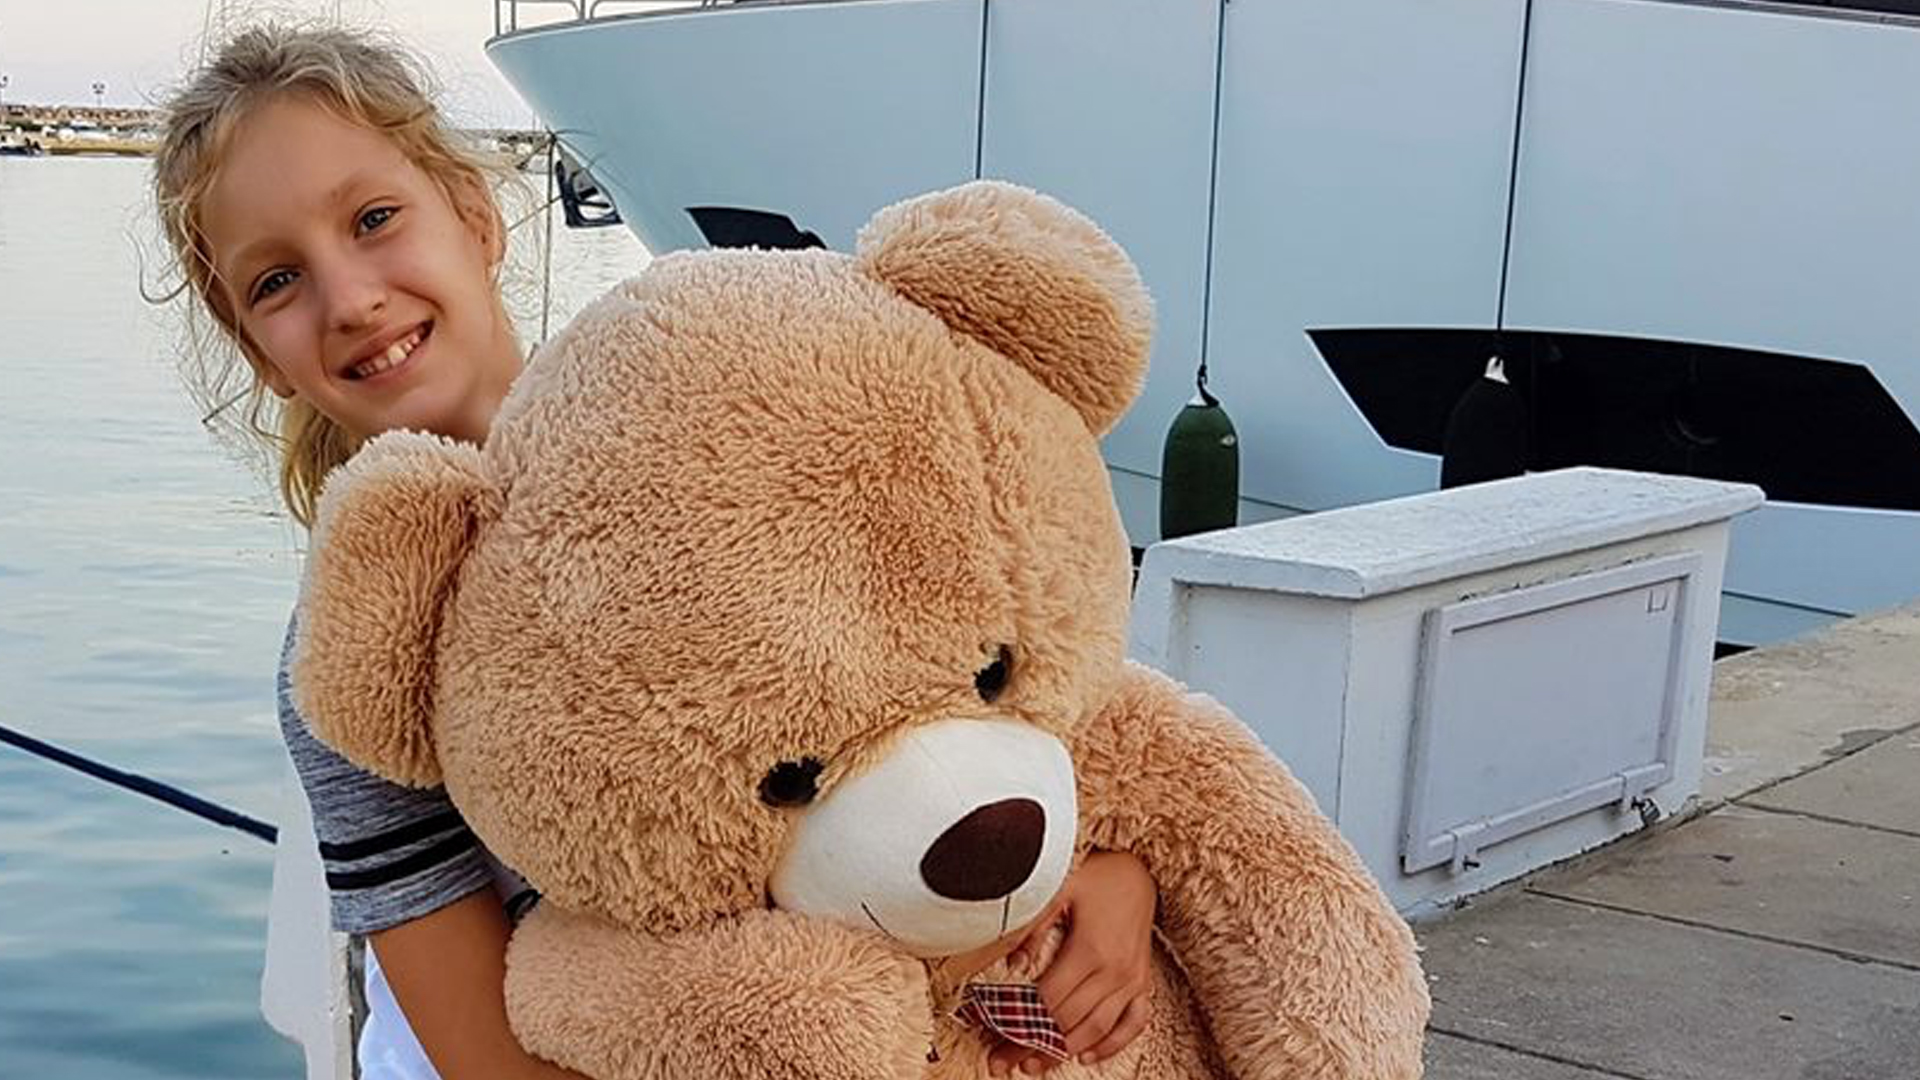 Sis holding a massive bear